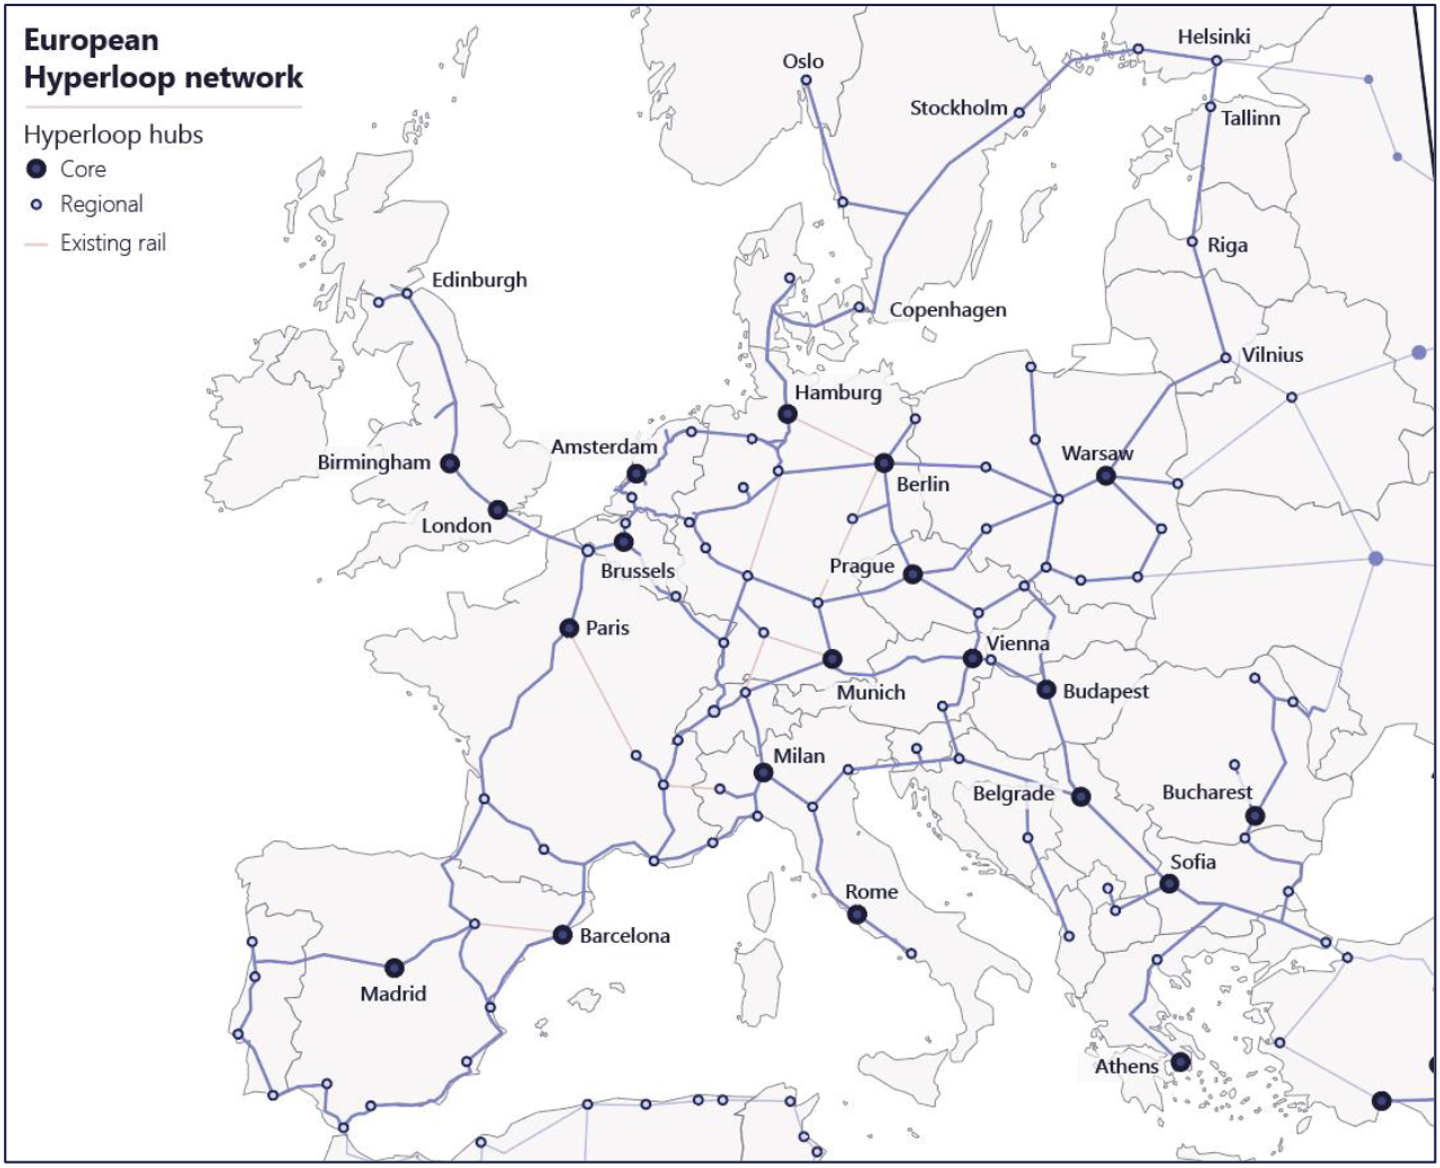 The European hyperloop network.